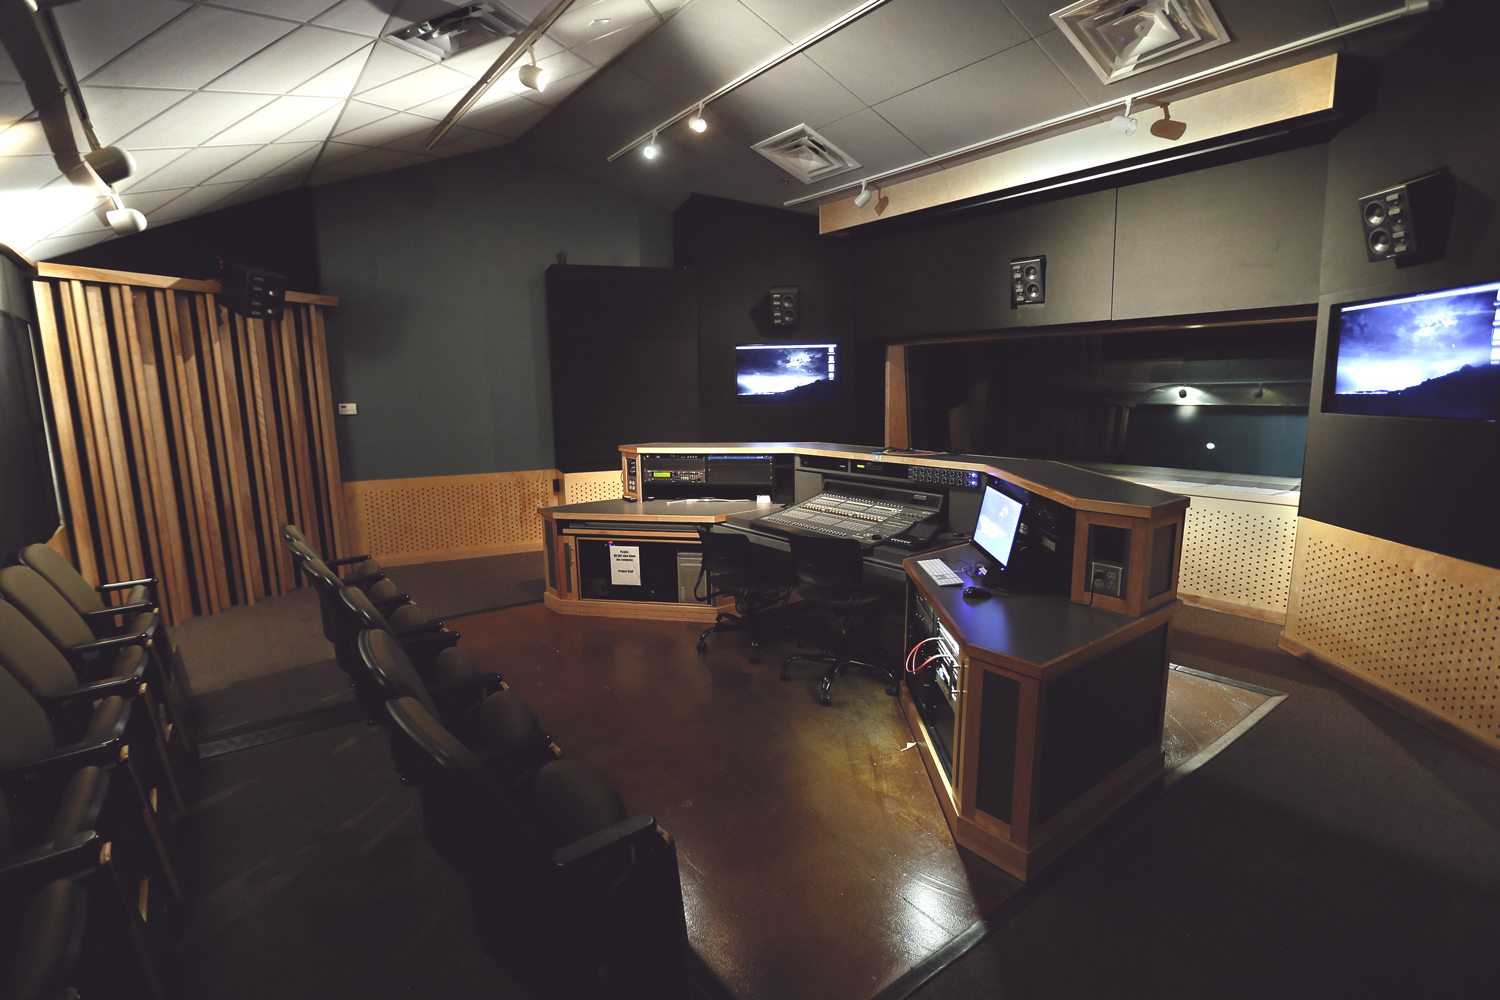 Midas Quadraphonic Studio Desk Backgrounds on Wallpapers Vista